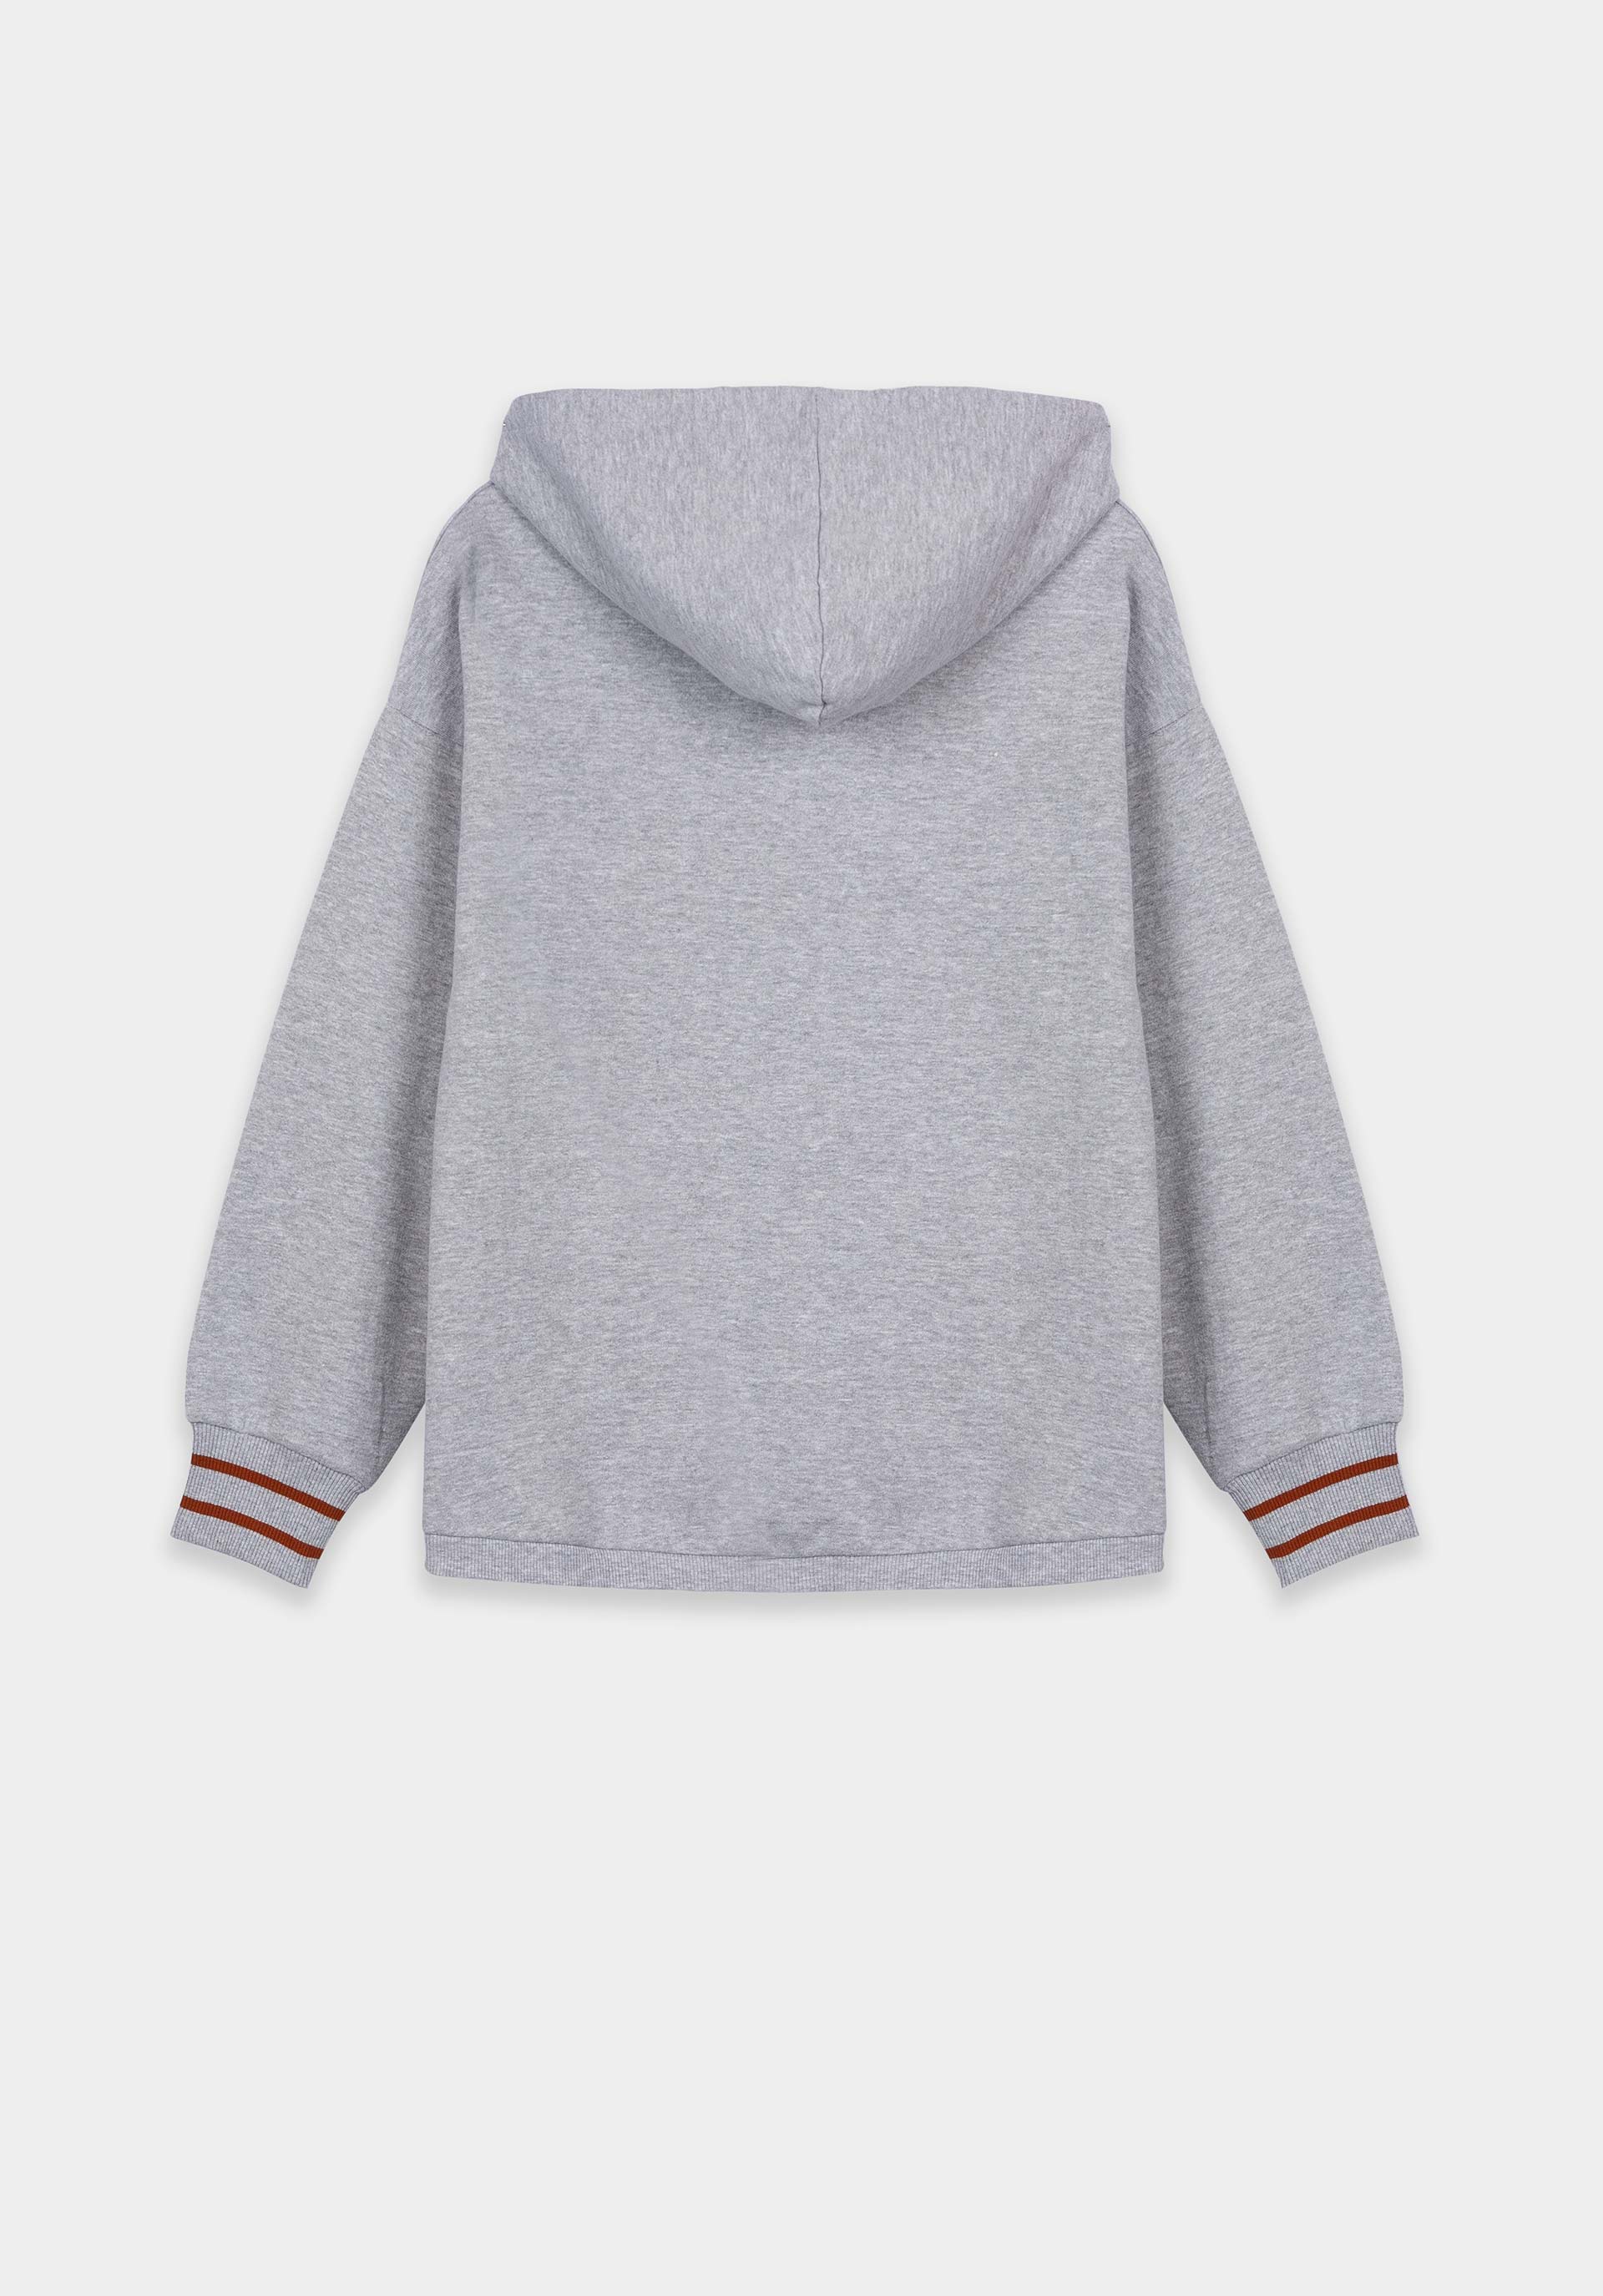 Tiffosi korte sweater grijs